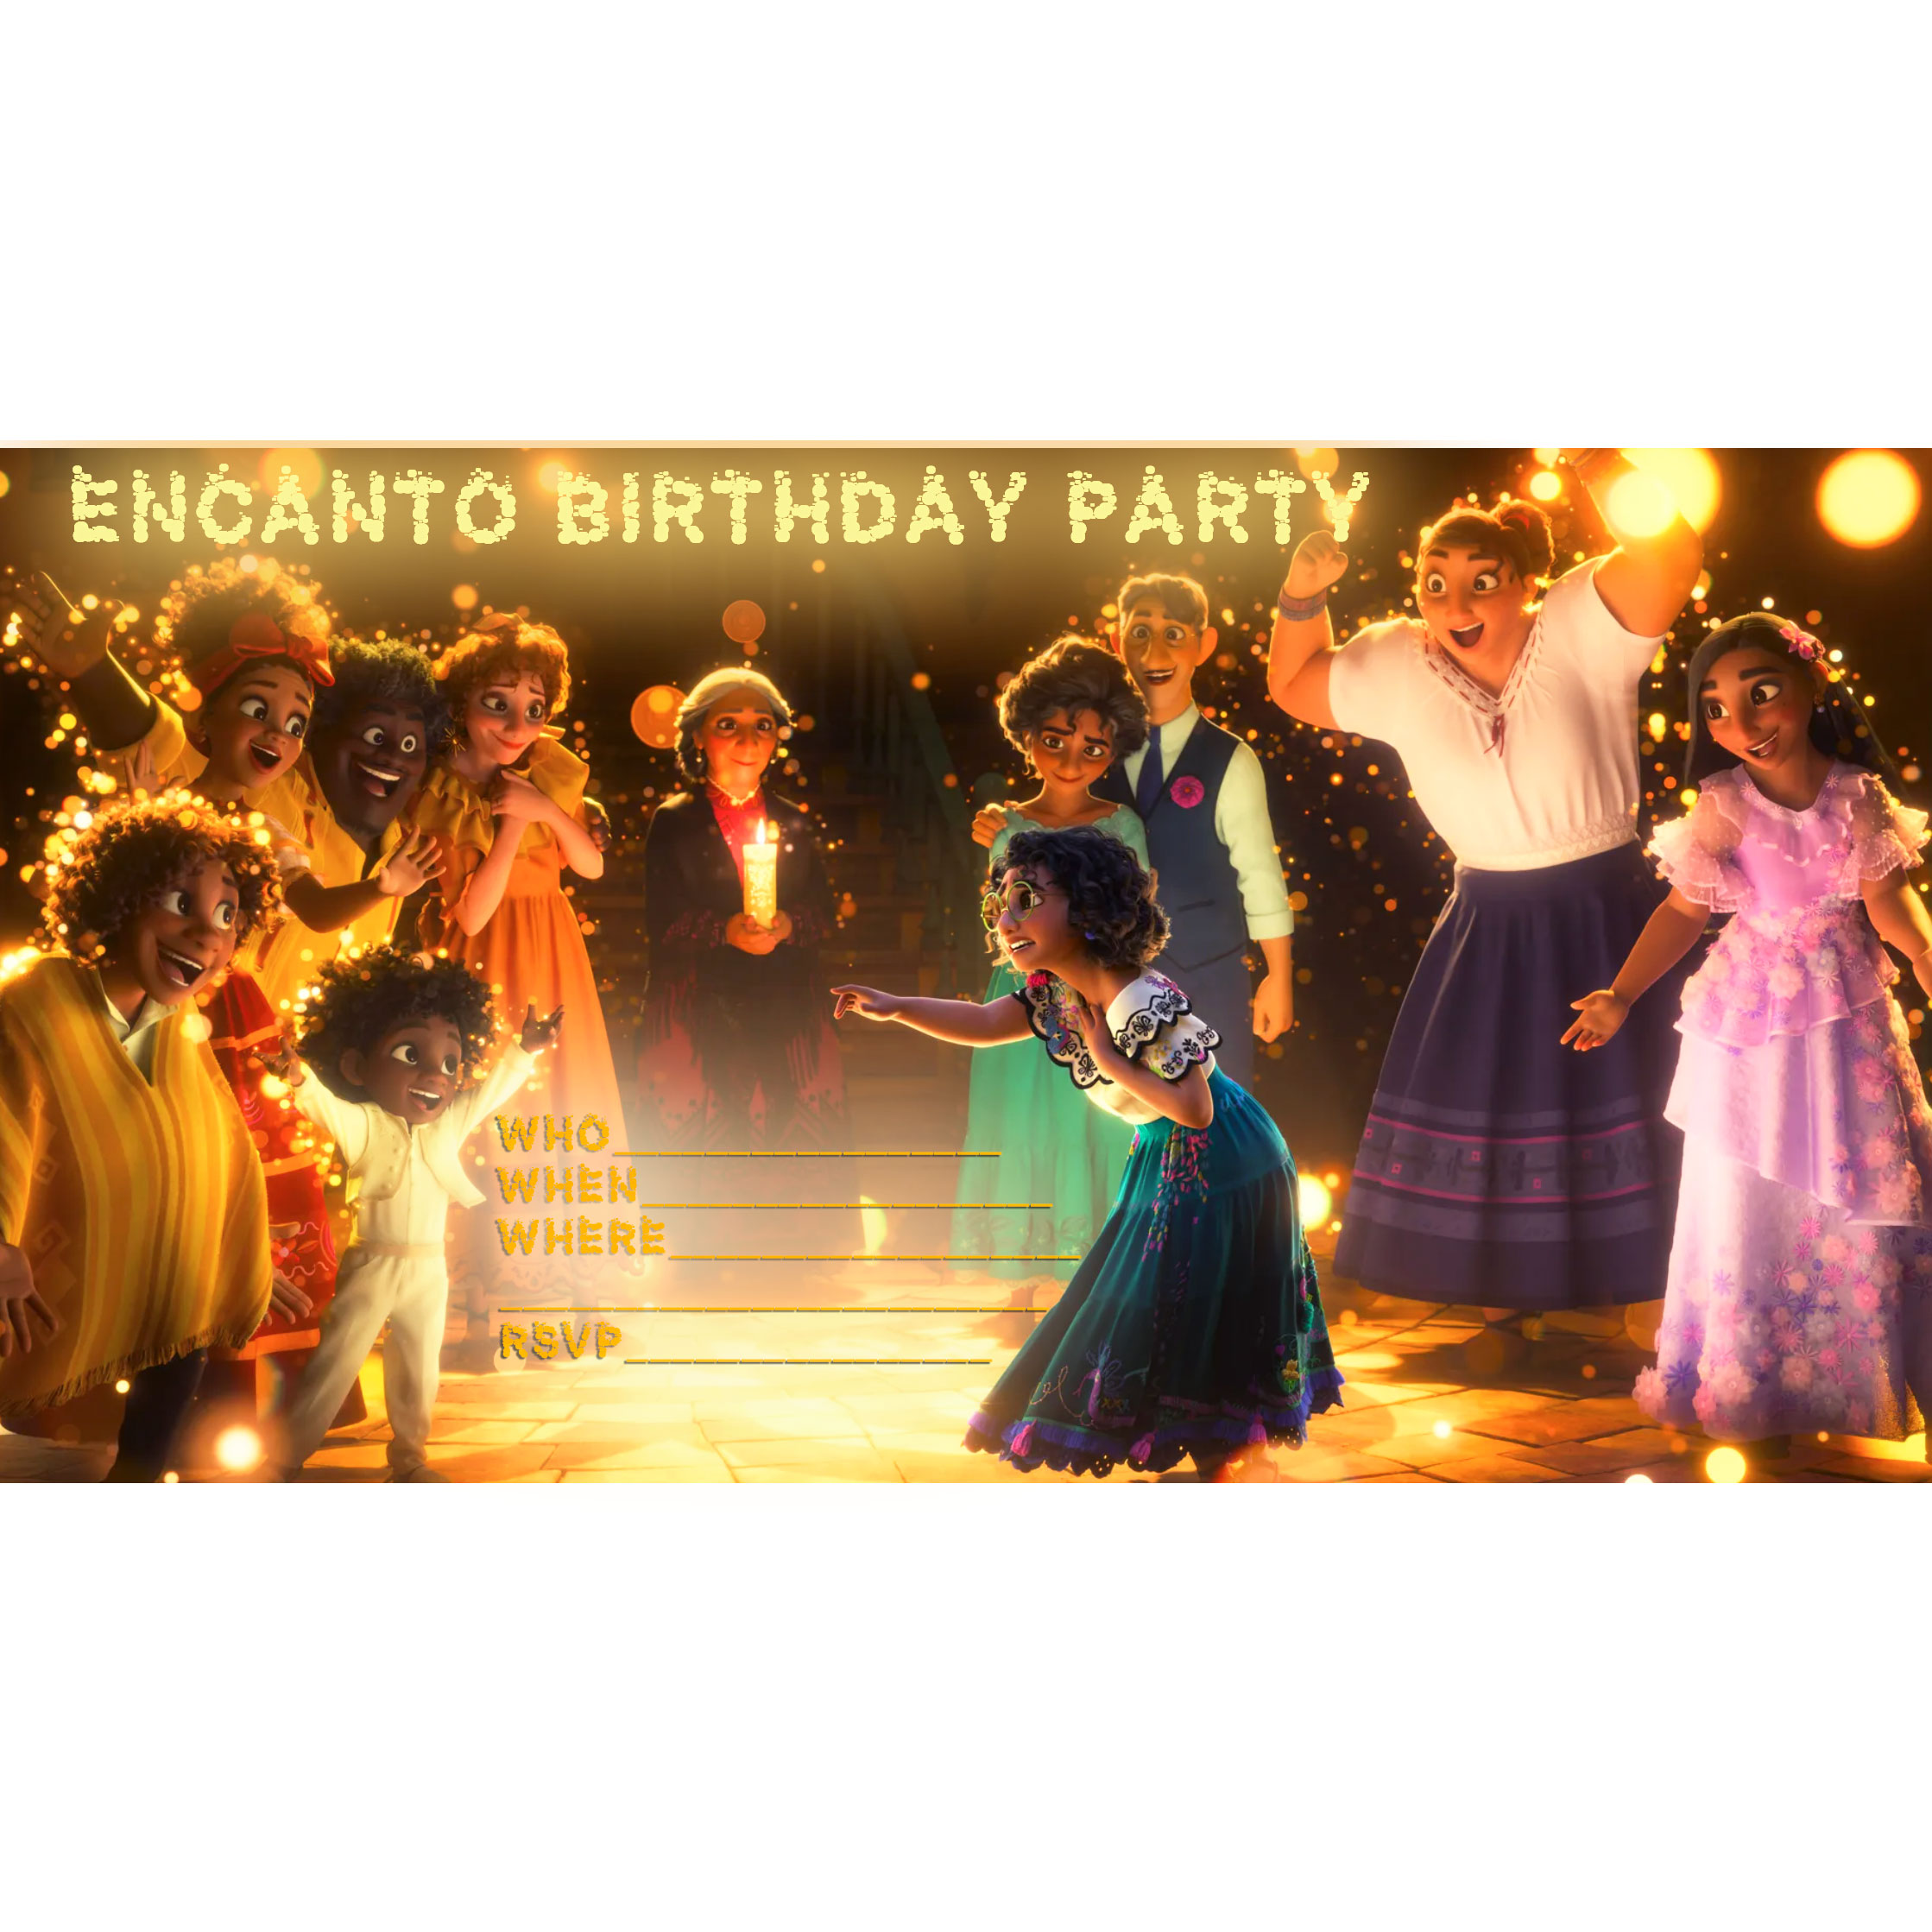 Free Encanto Birthday Party Invitation Download